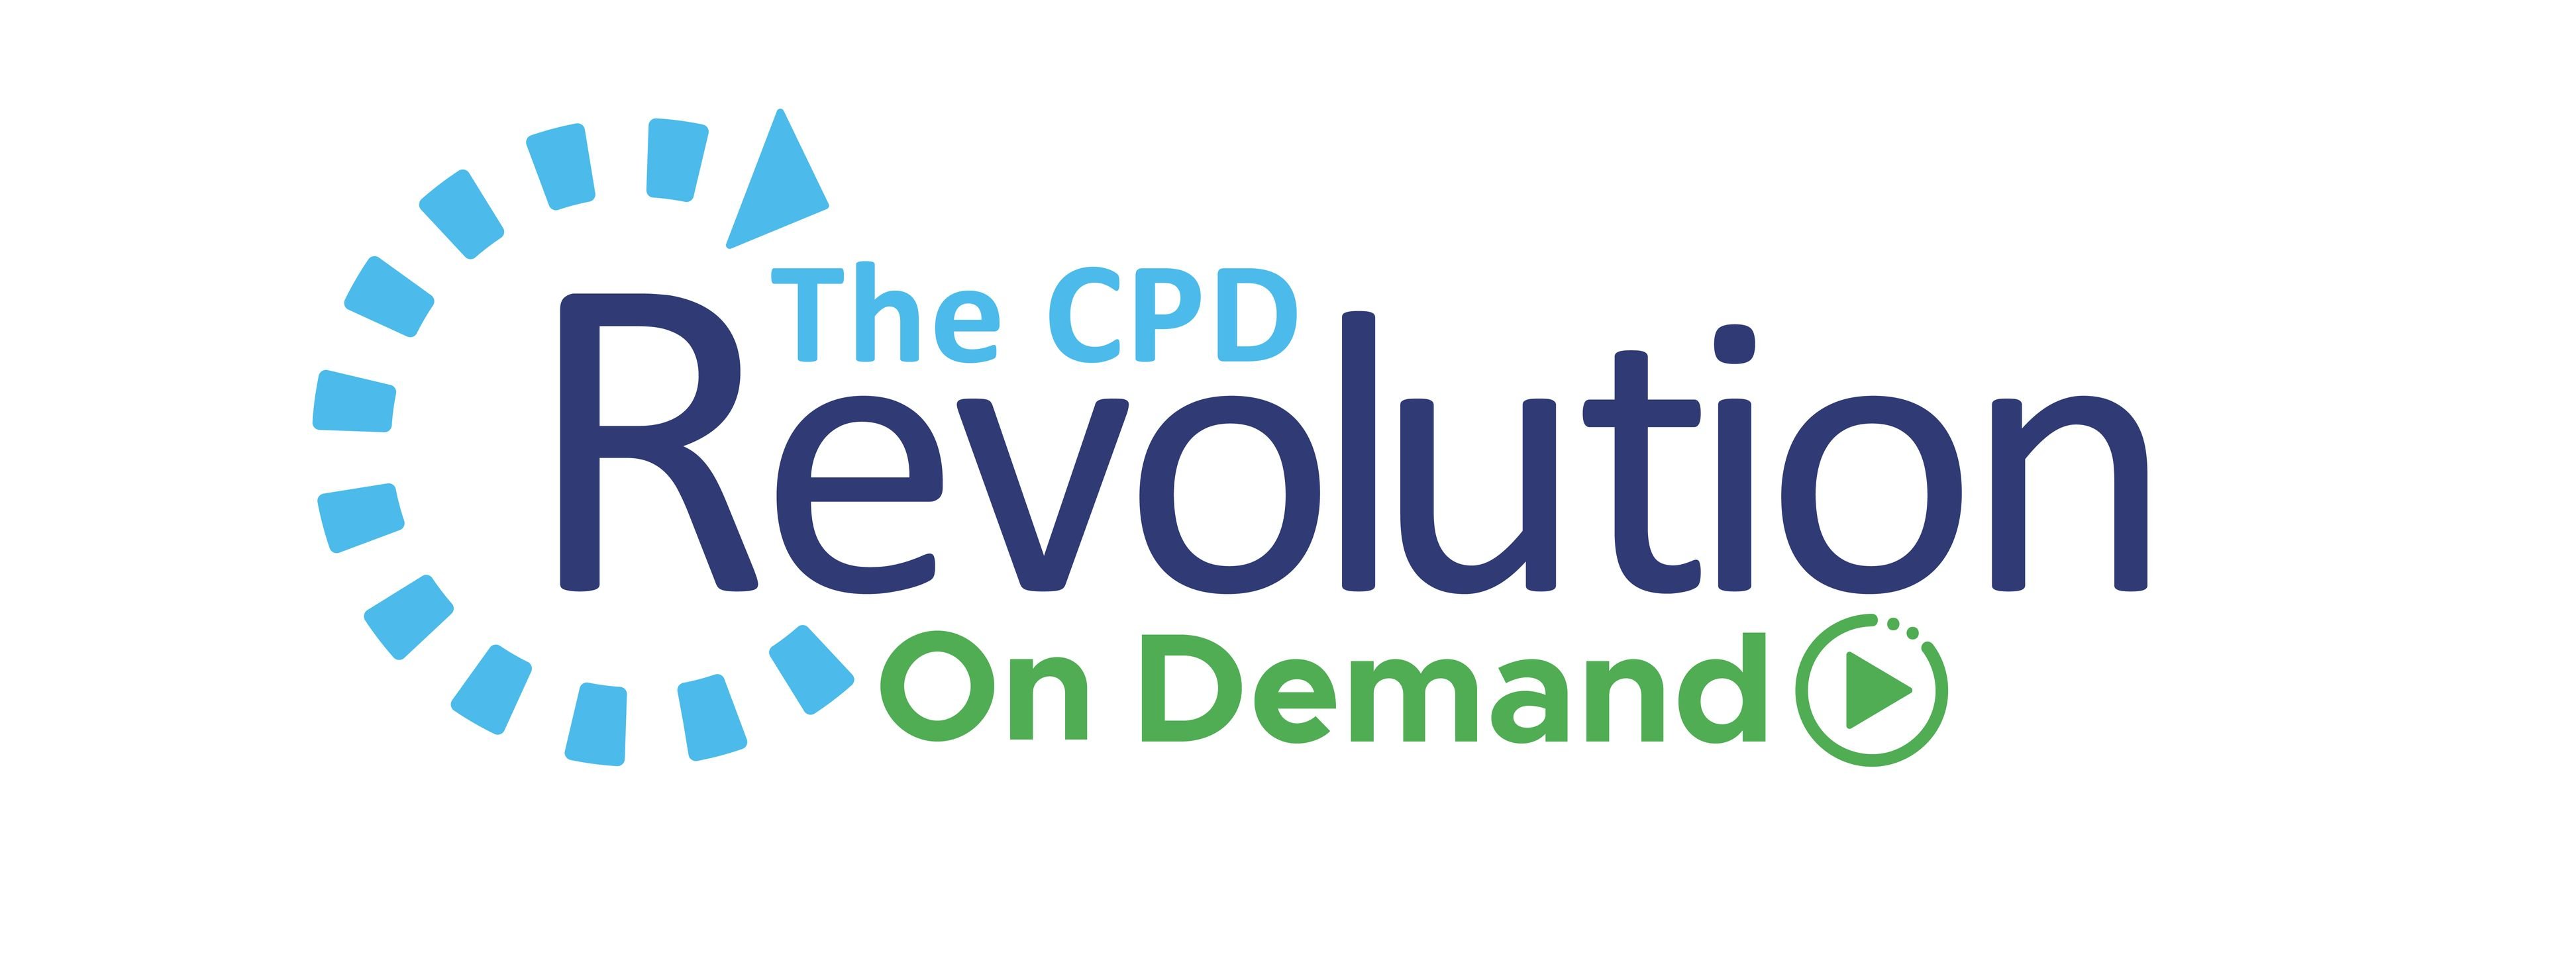 CPD Revolution on demand